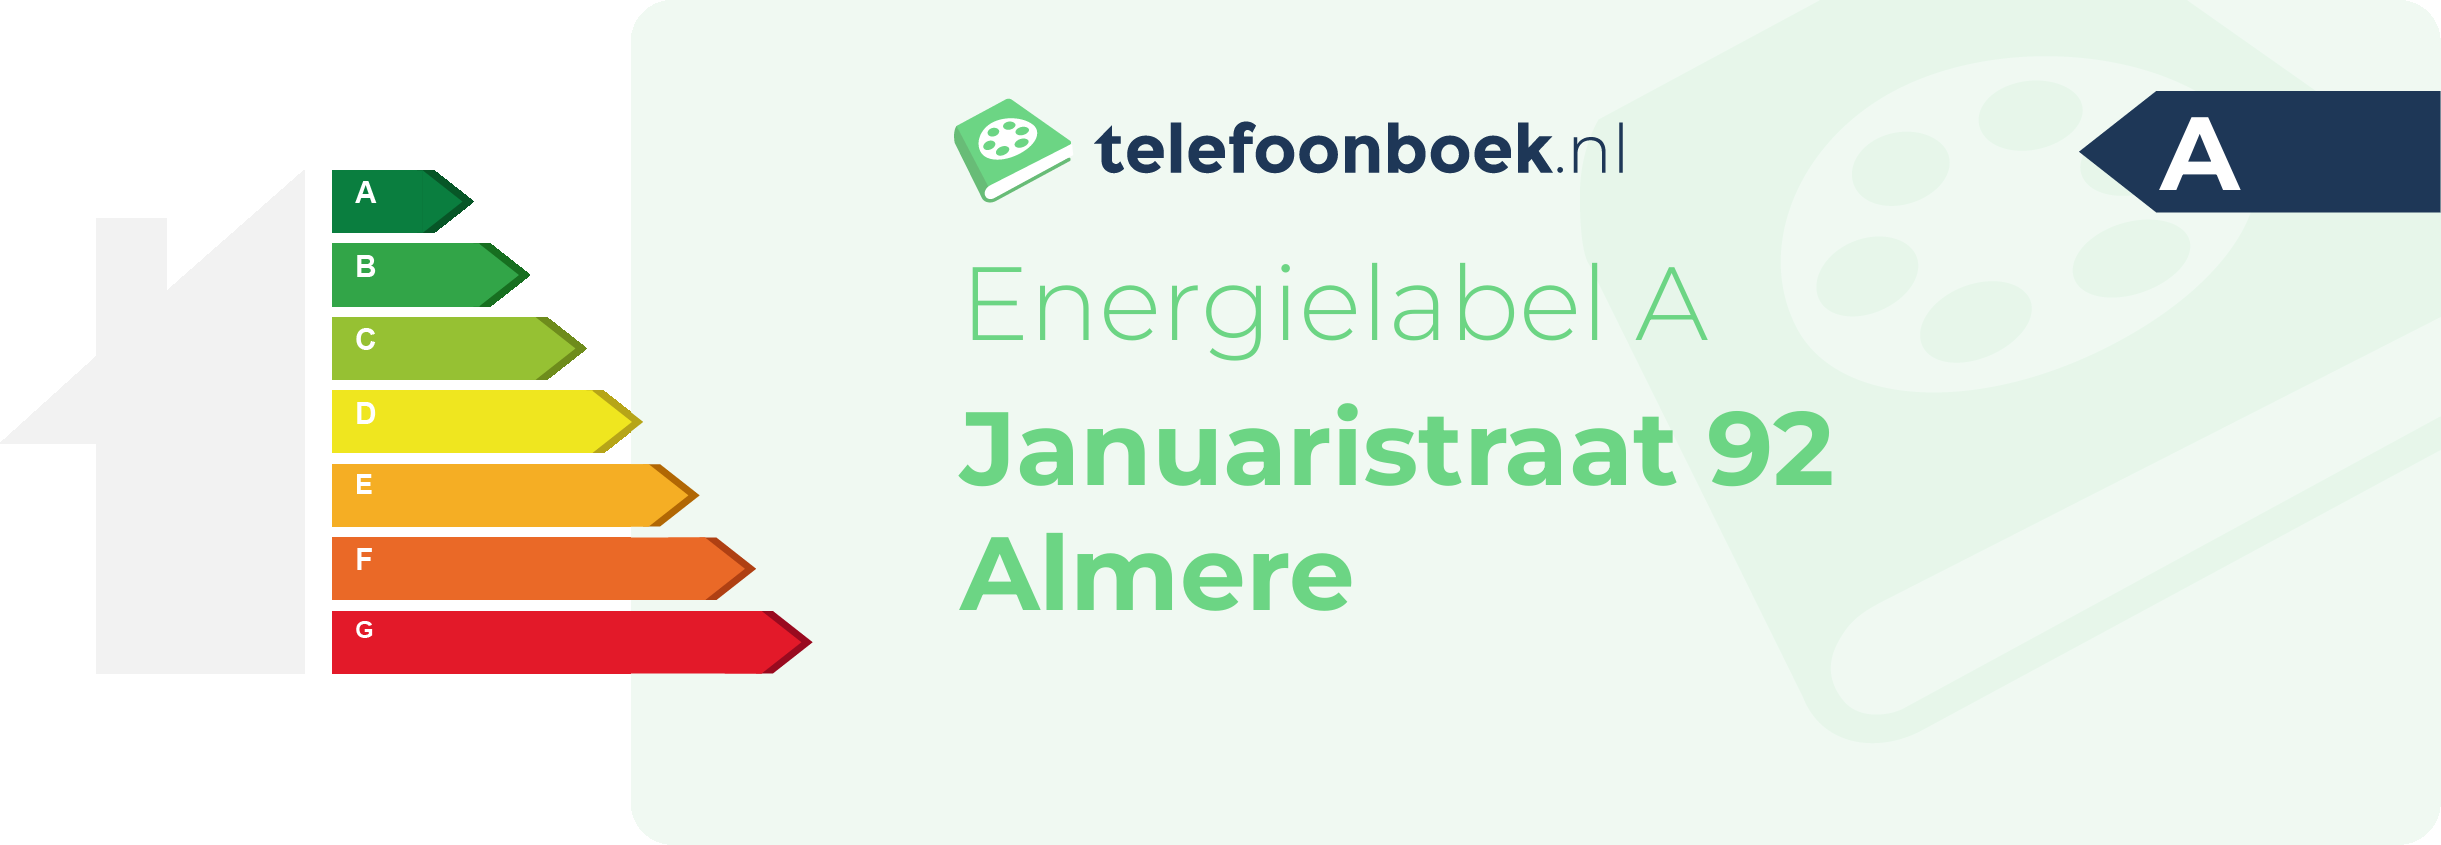 Energielabel Januaristraat 92 Almere